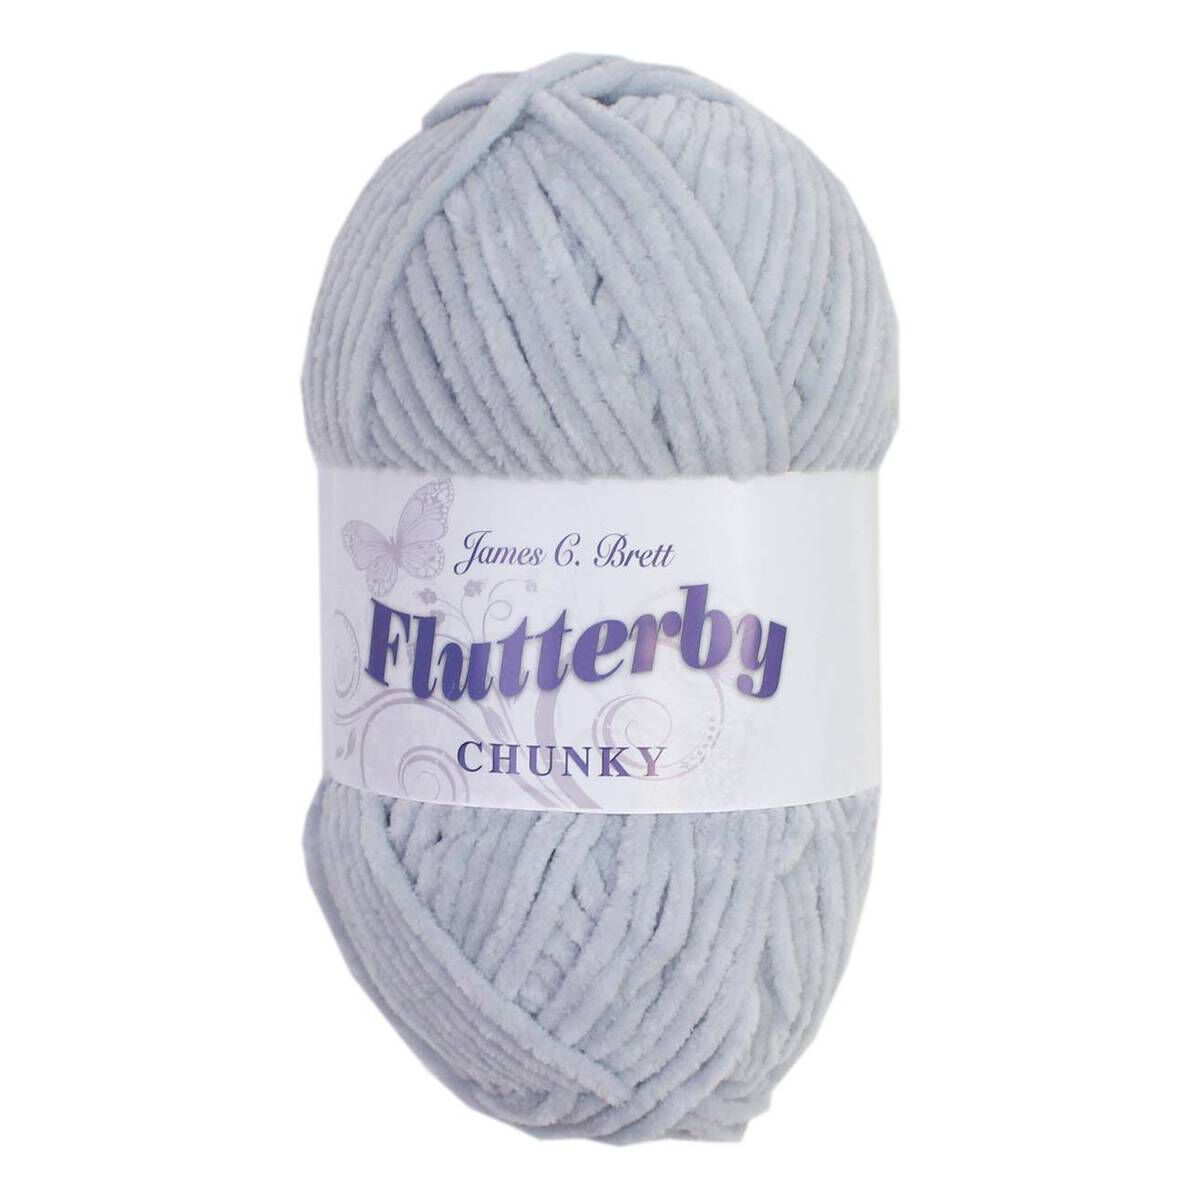 James C Brett Silver Flutterby Chunky Yarn 100g Hobbycraft